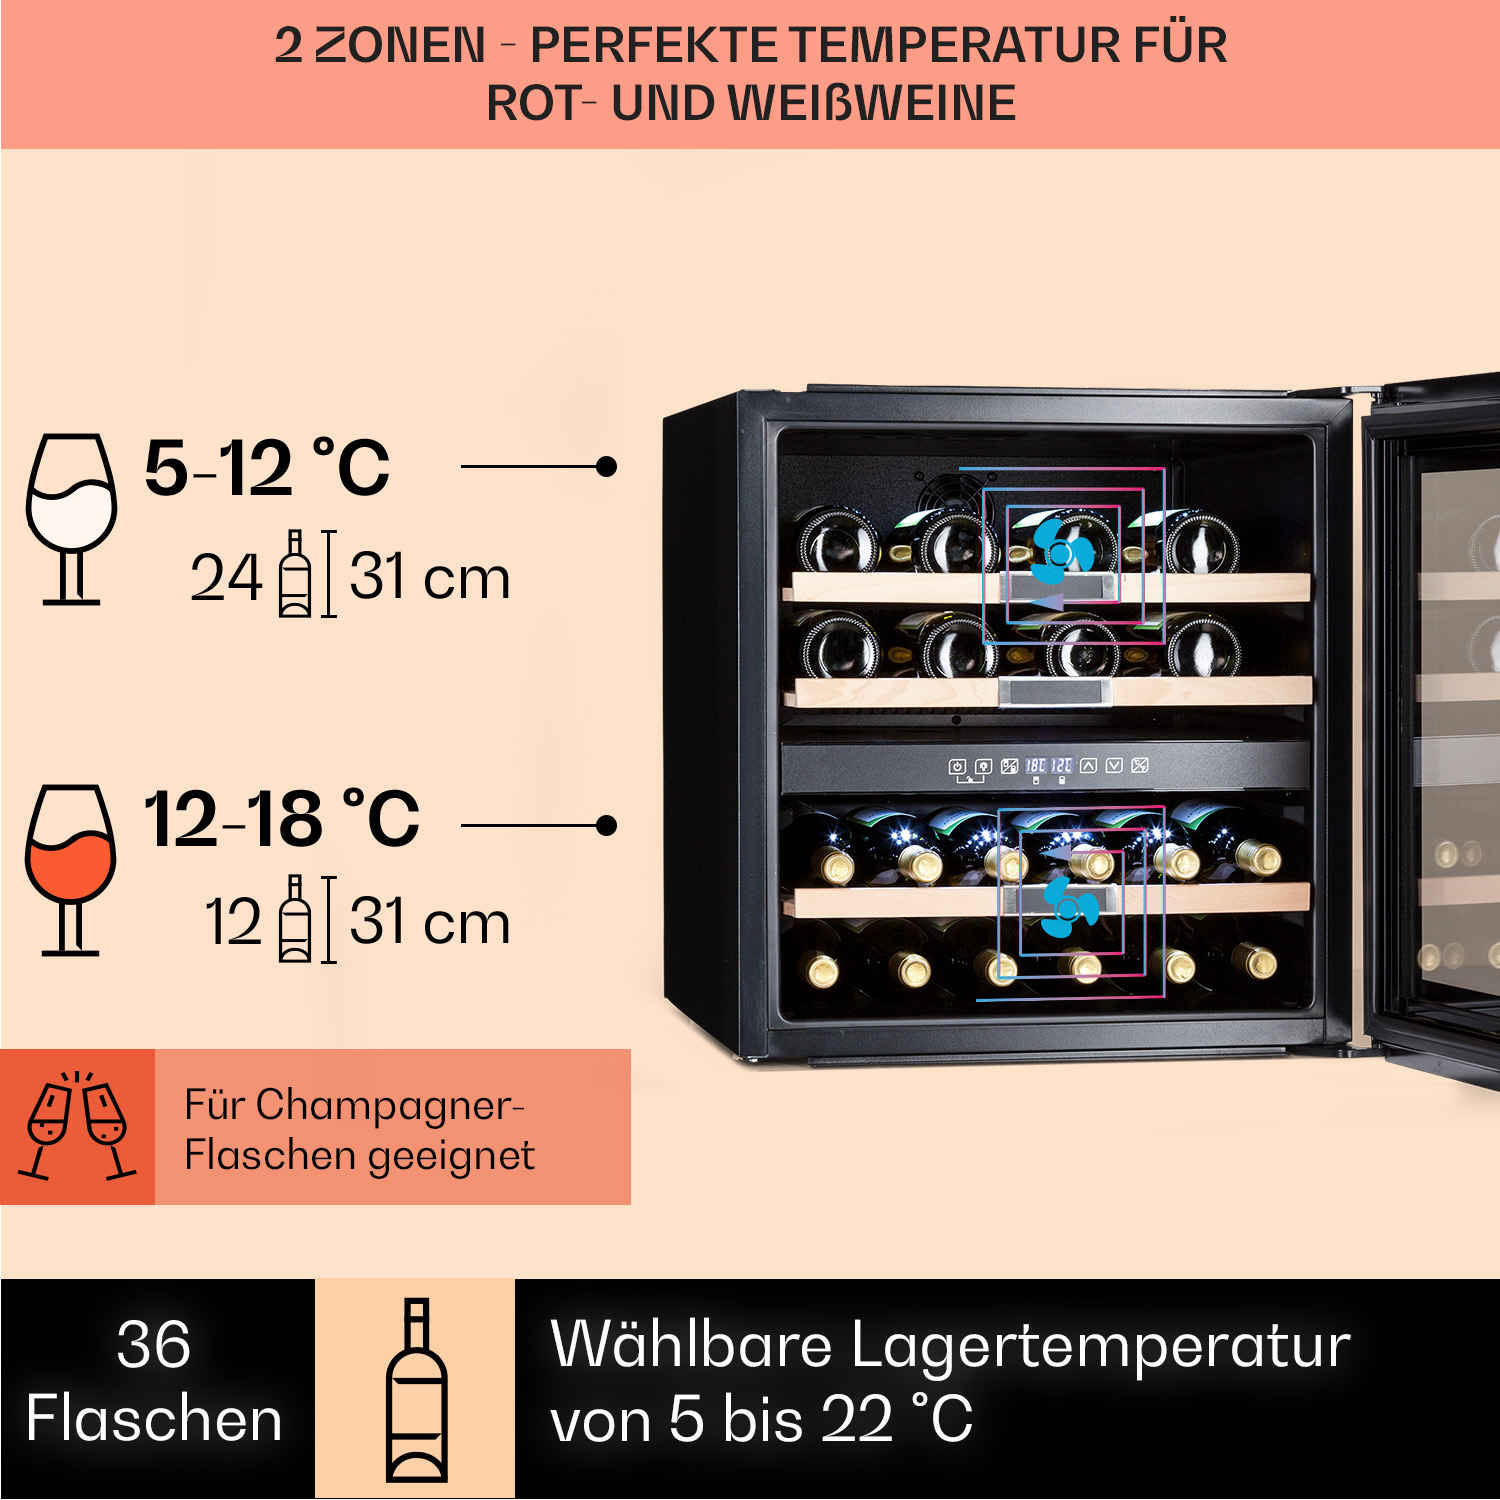 36 G, Mini-Kühlschrank (EEK Quartz KLARSTEIN Quartz) Edition Vinsider